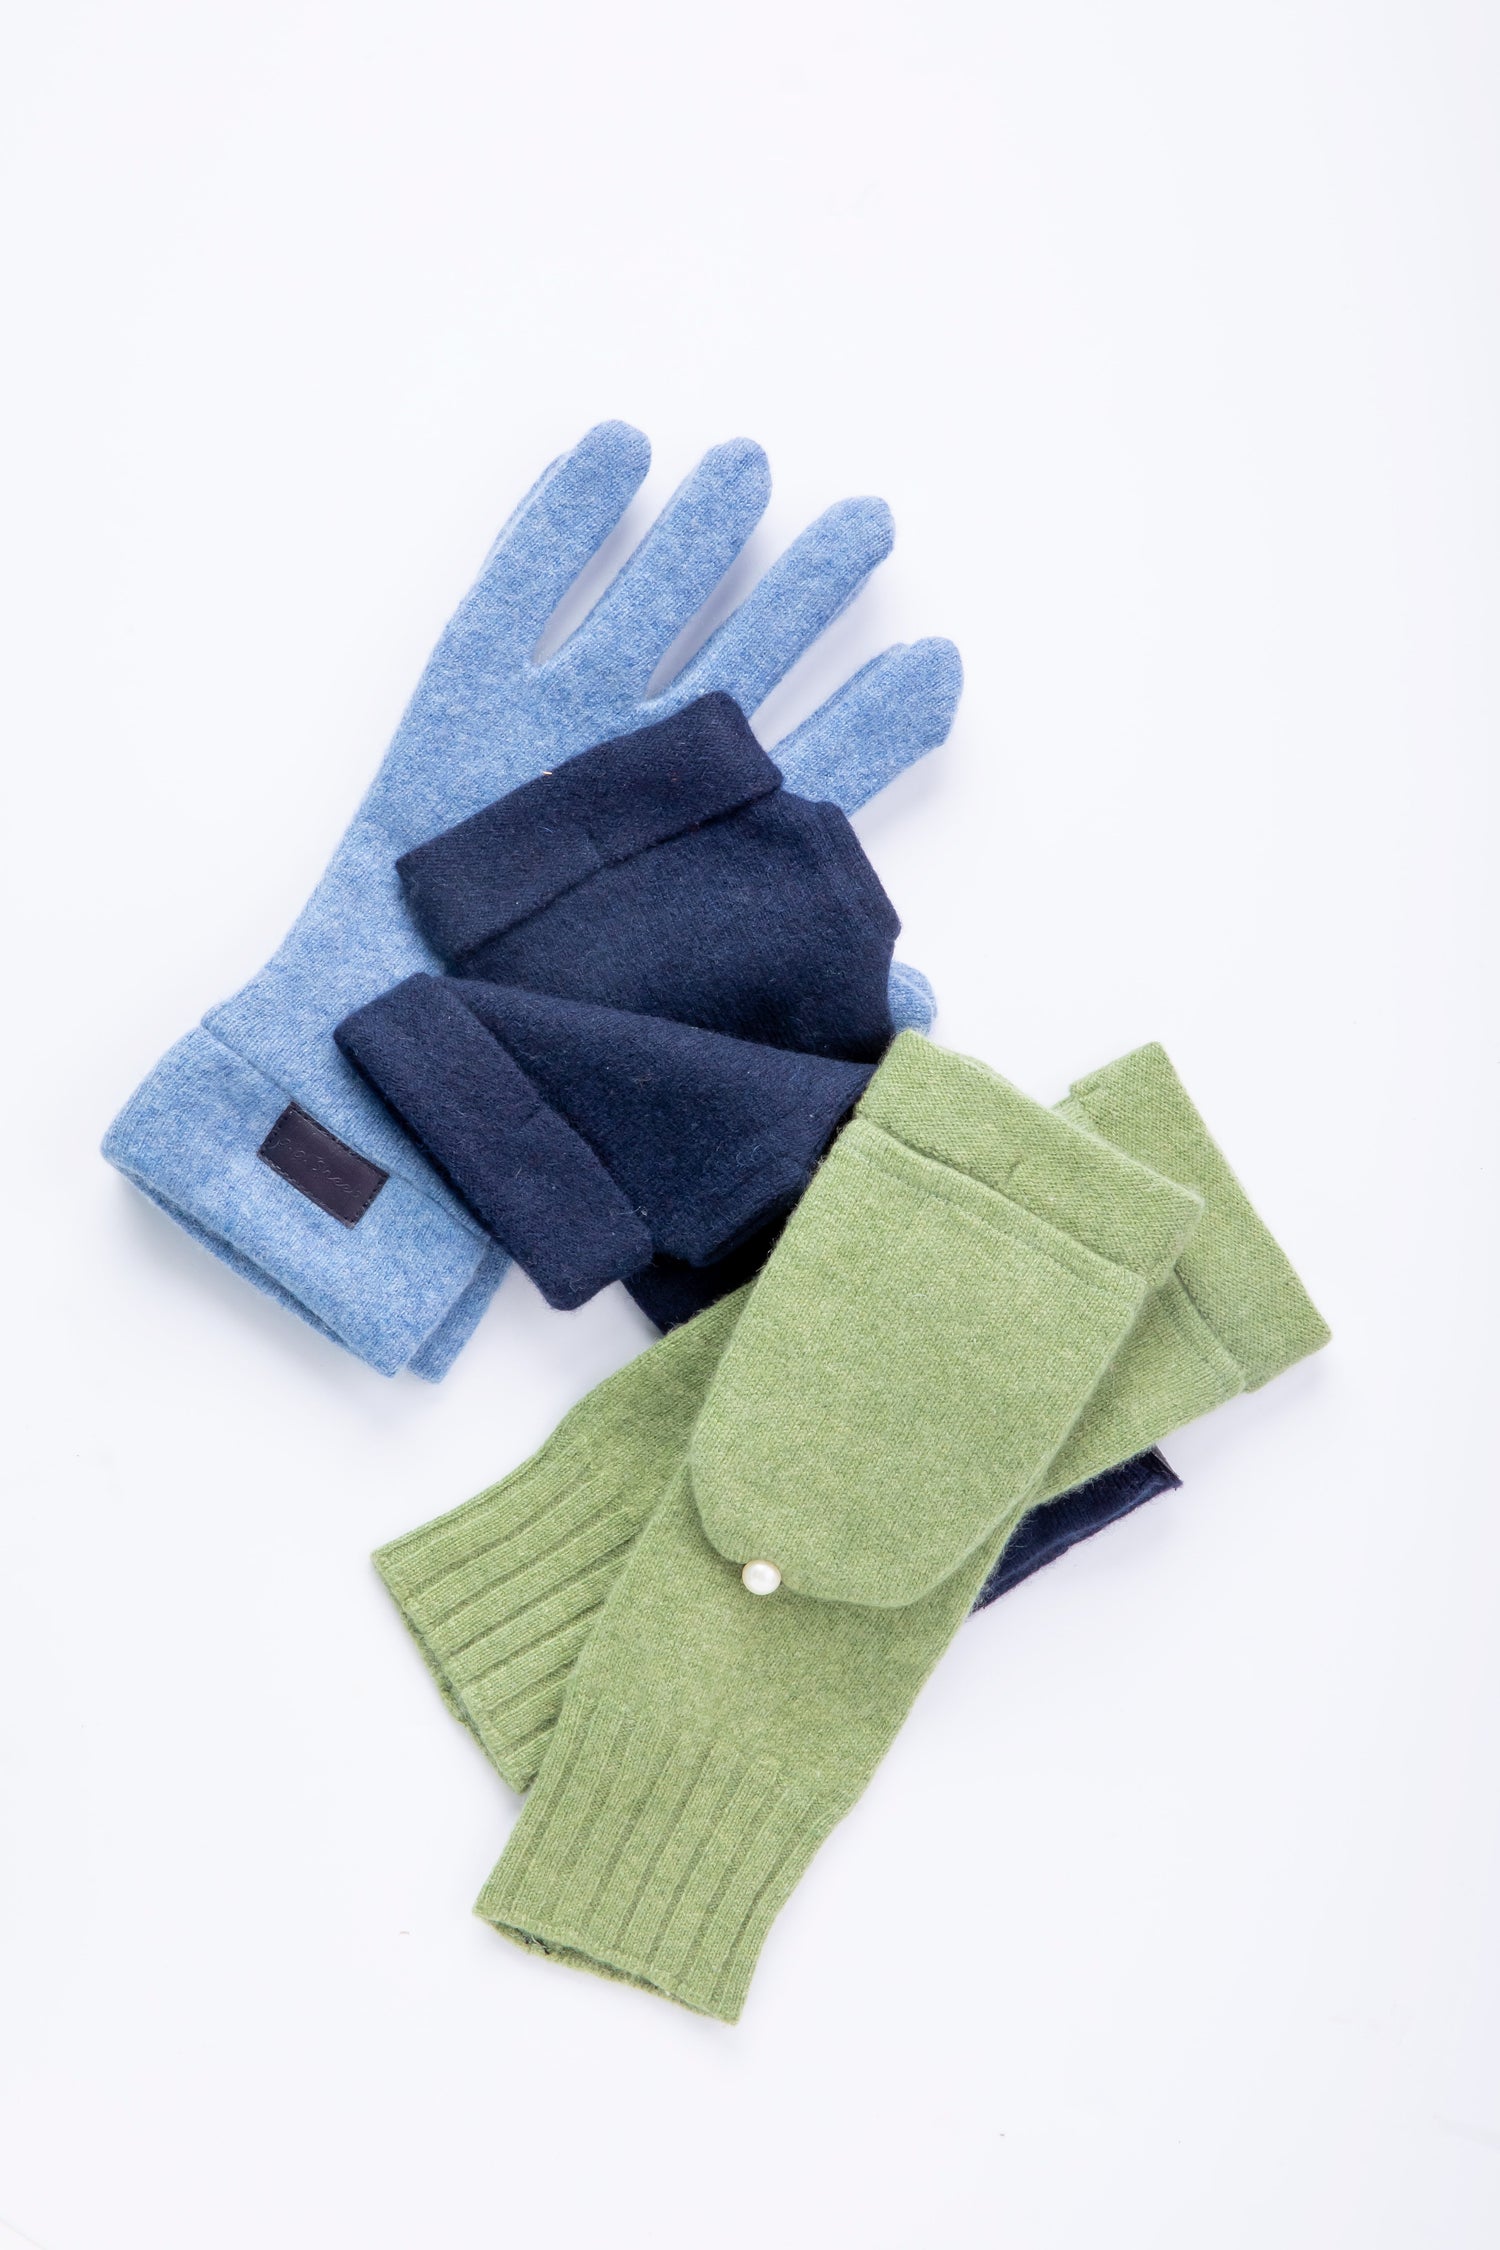 Nature Assorted Gloves Set - Bright Blue, Matcha Green, Navy Blue - Box of 3